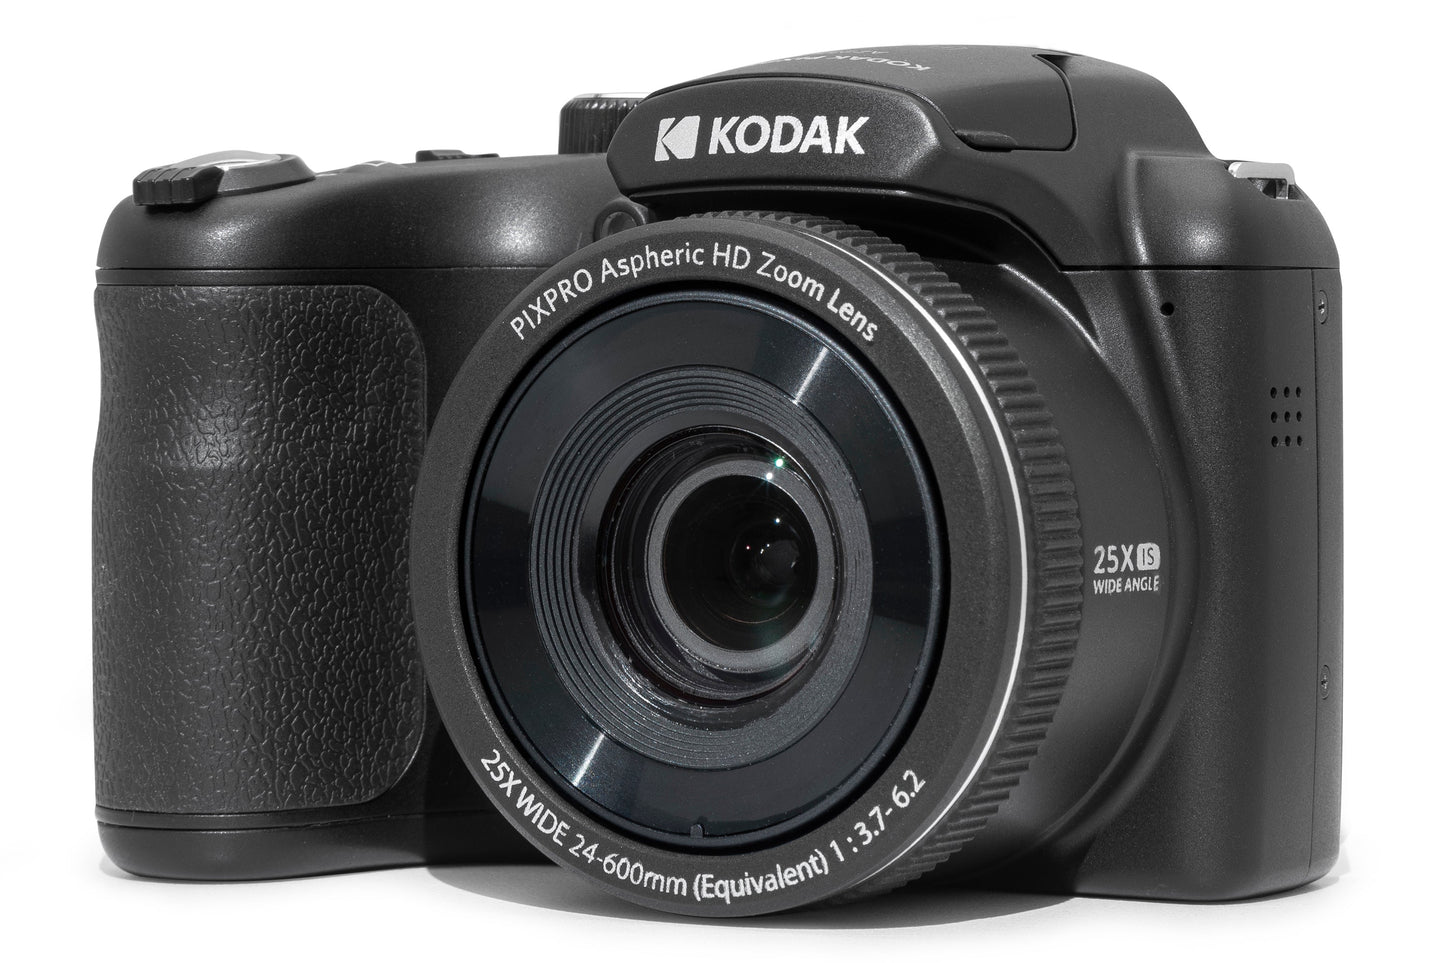 Kodak PIXPRO AZ255 16MP 25x Astro Zoom Bridge Camera – Black - maplin.co.uk